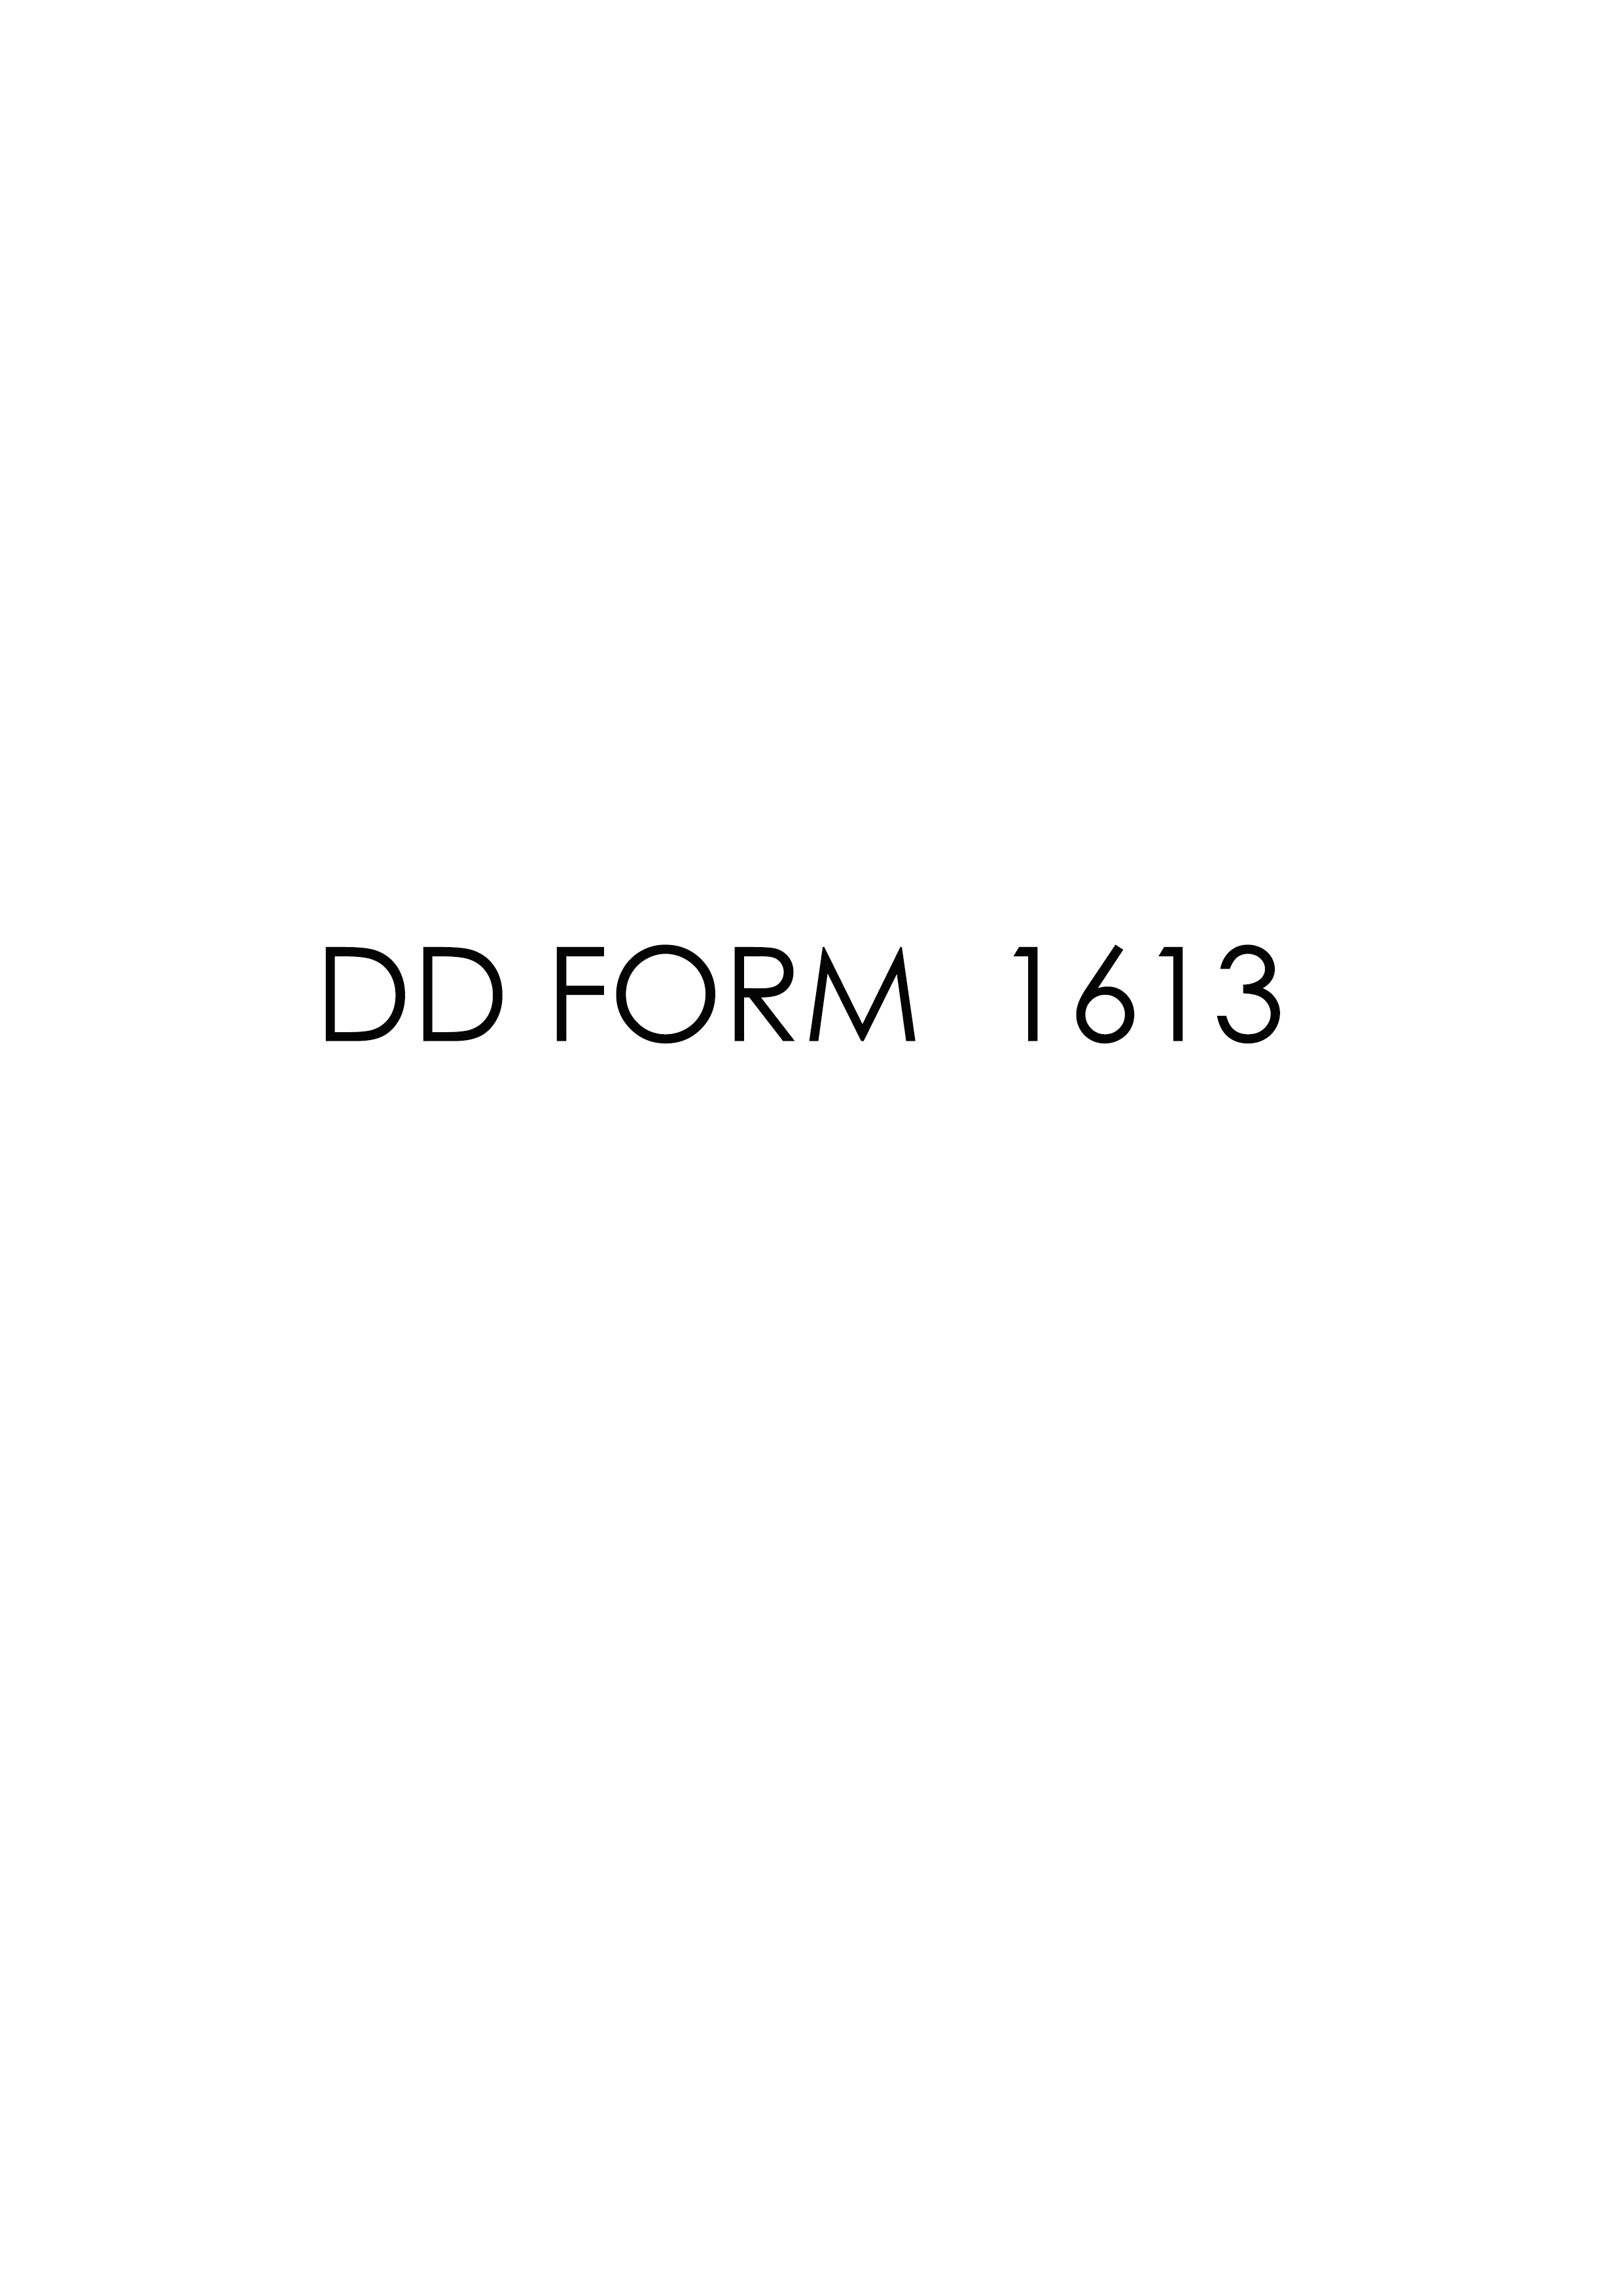 Download dd form 1613